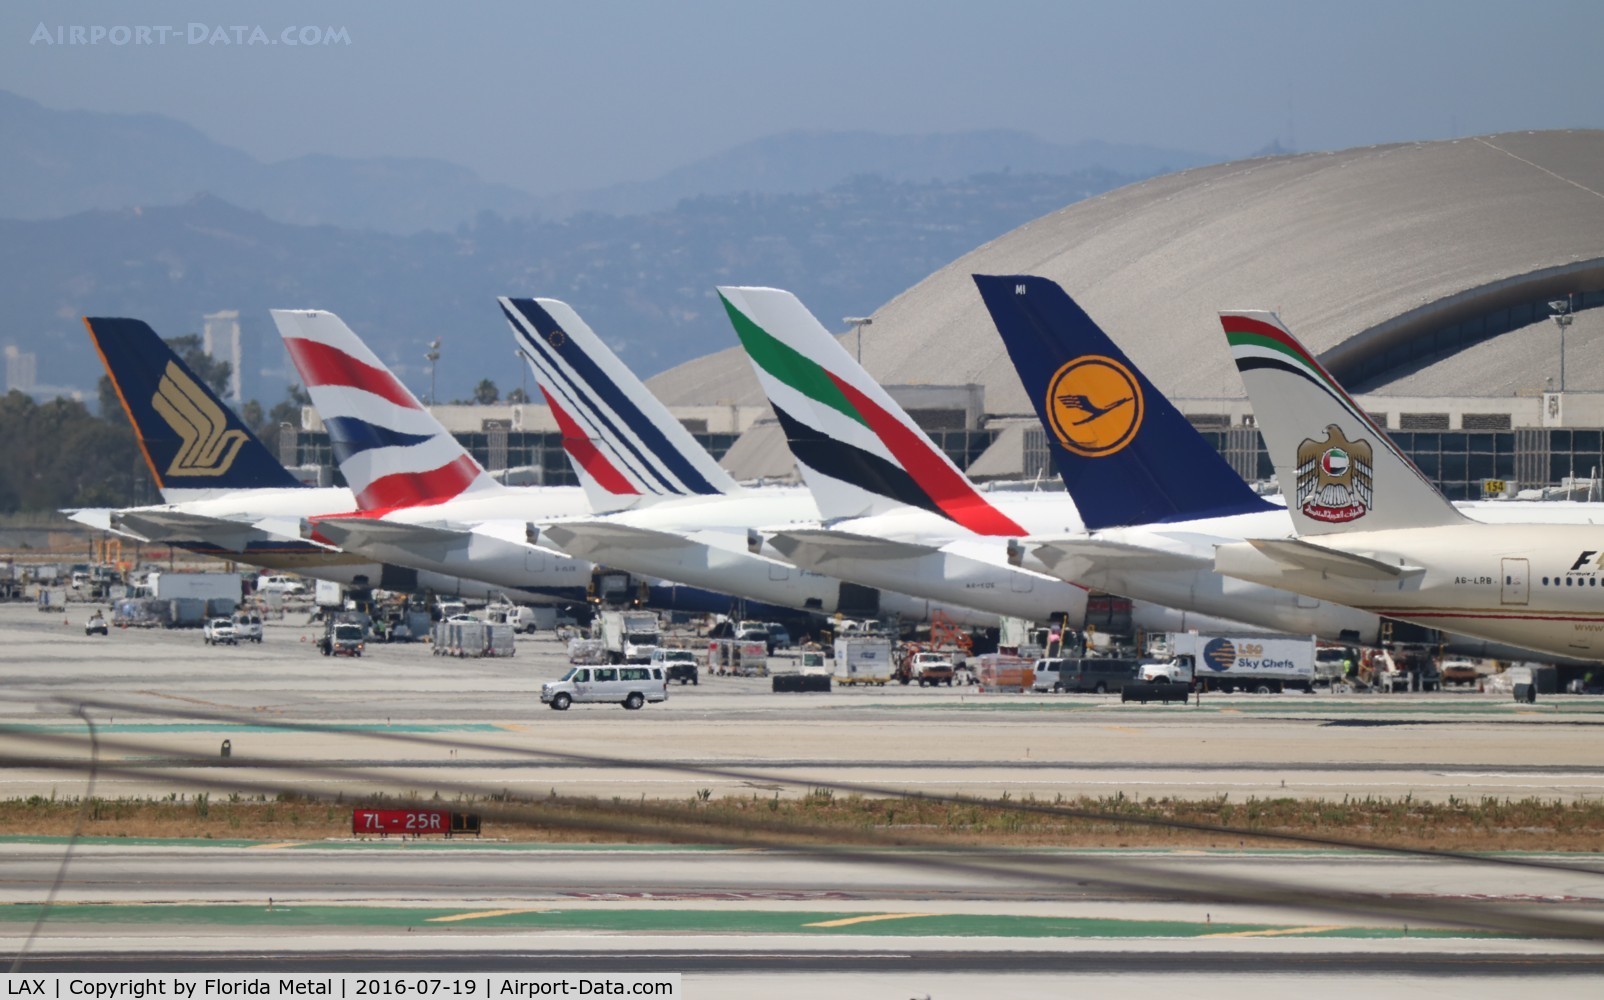 Los Angeles International Airport (LAX) - LAX line up